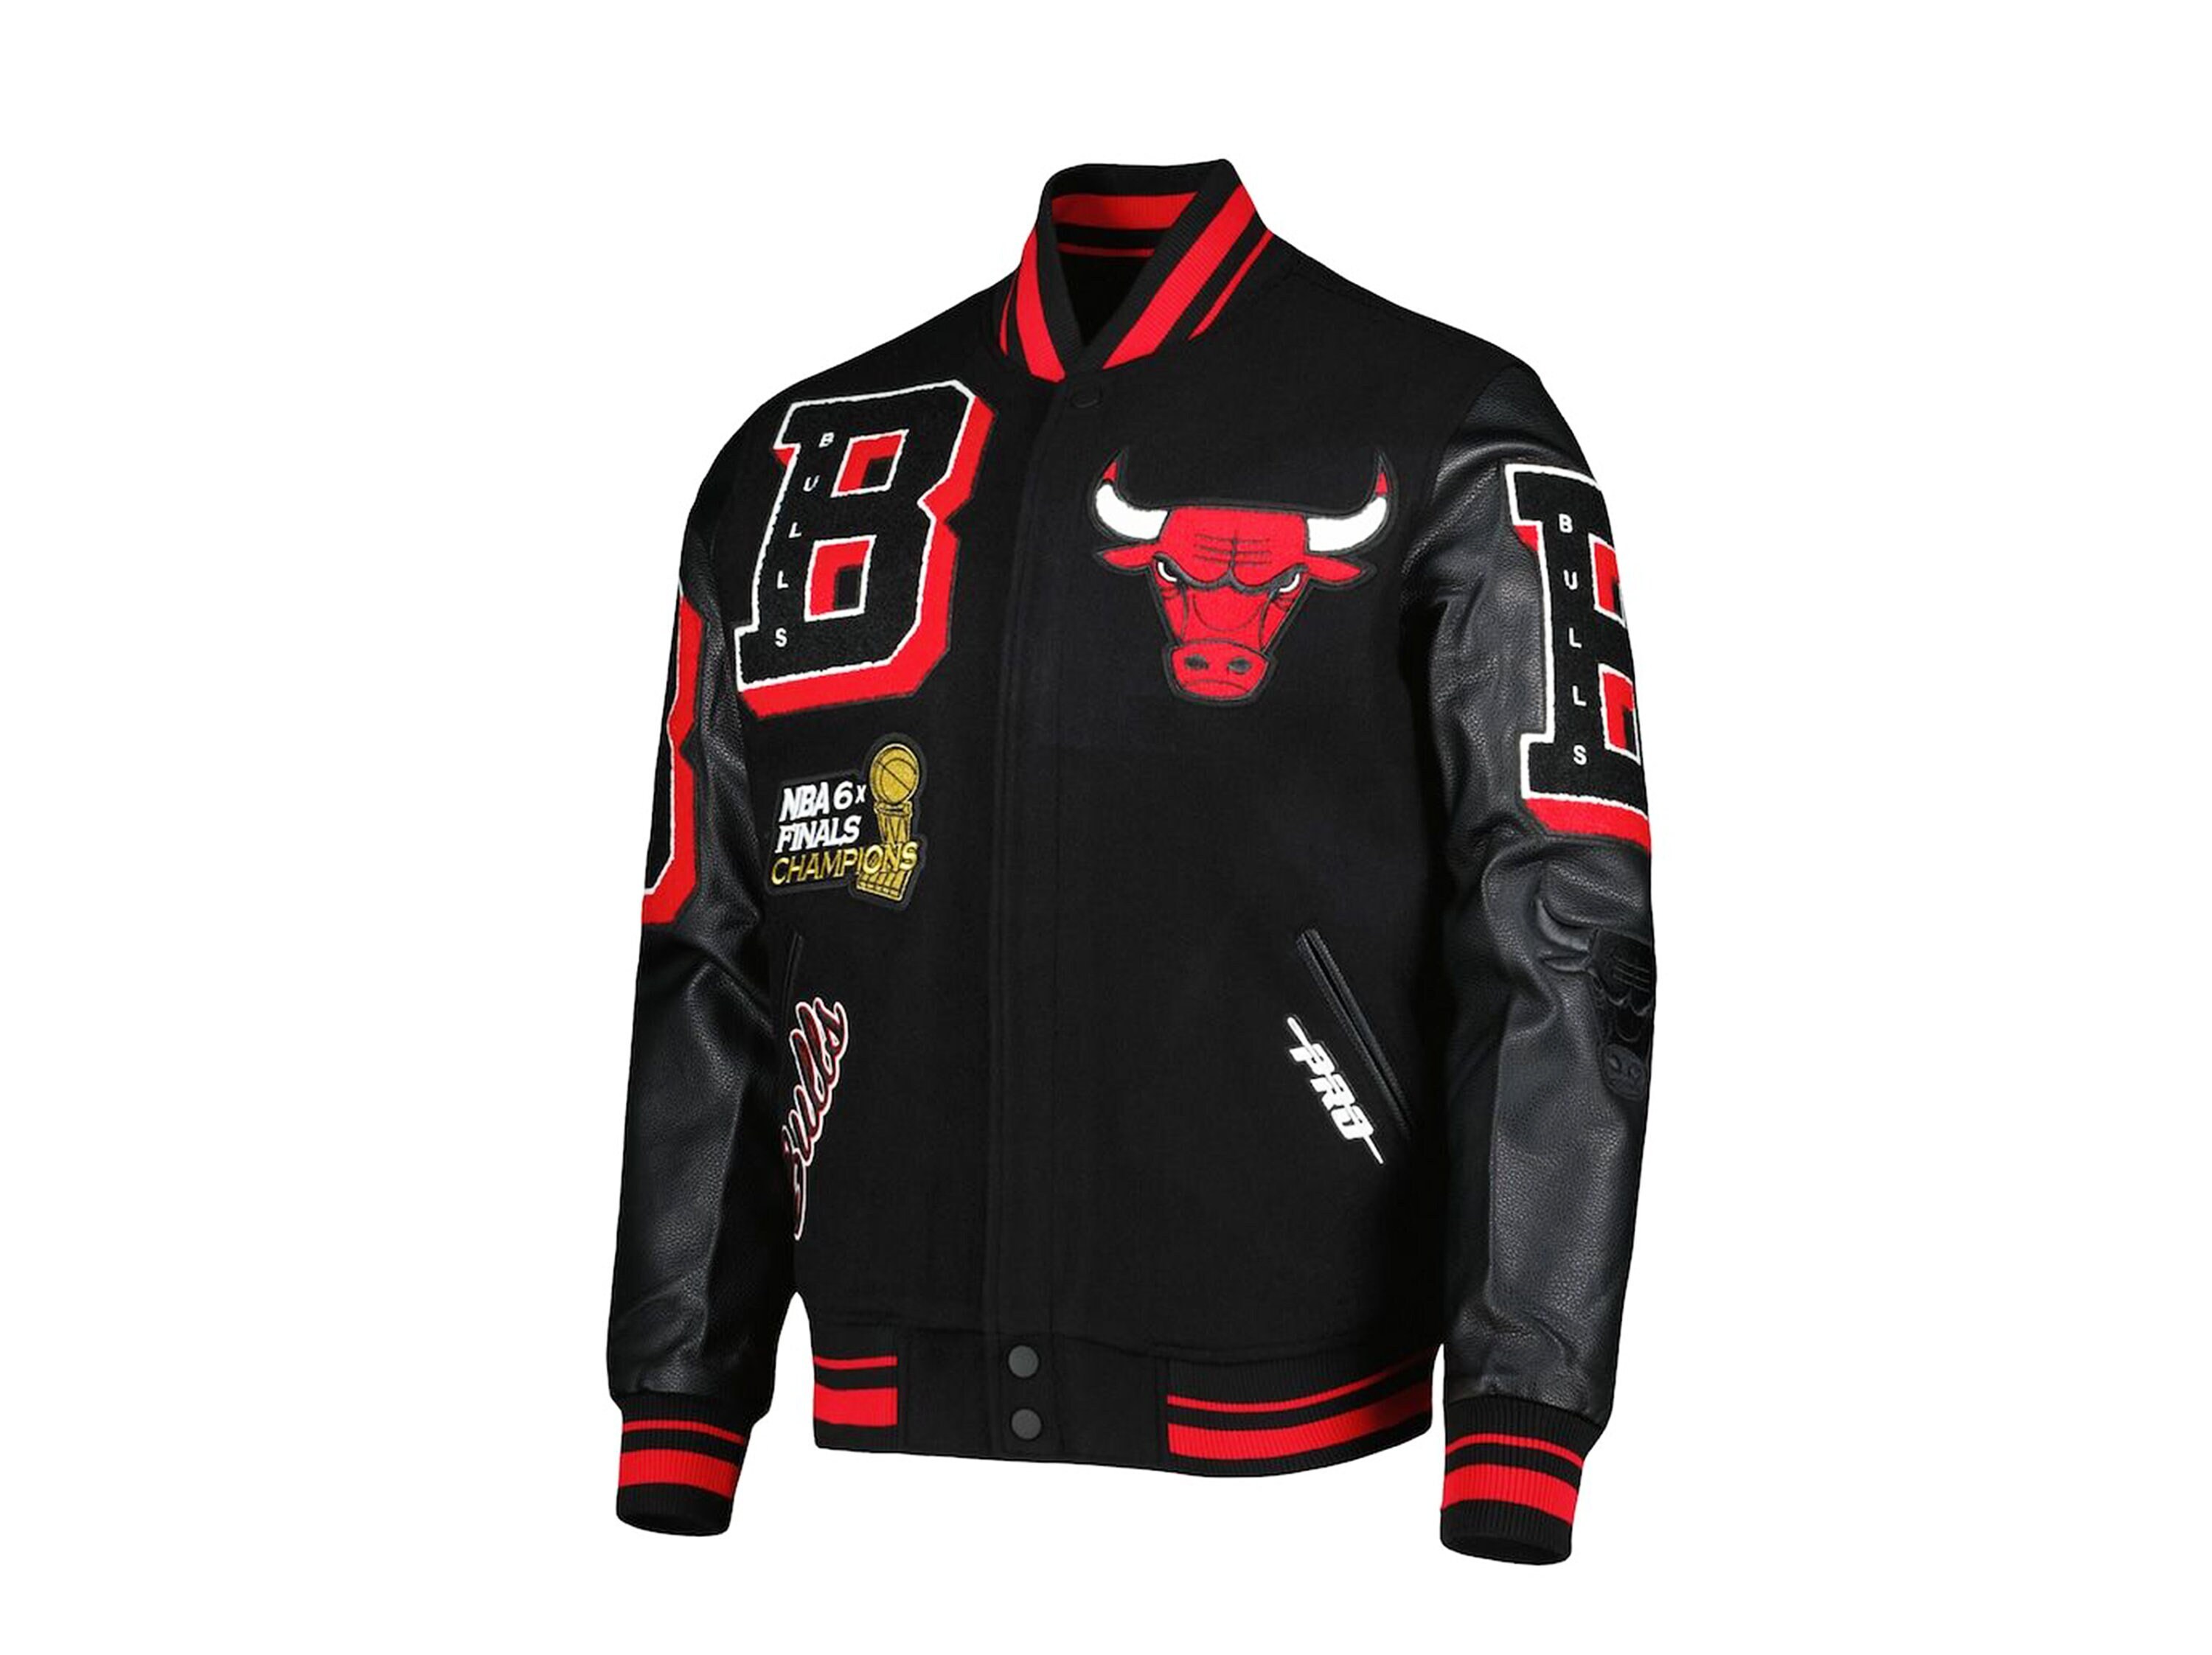 Chicago Bulls Pro Standard Women's Retro Classic Varsity Full-Zip Jacket -  Cream